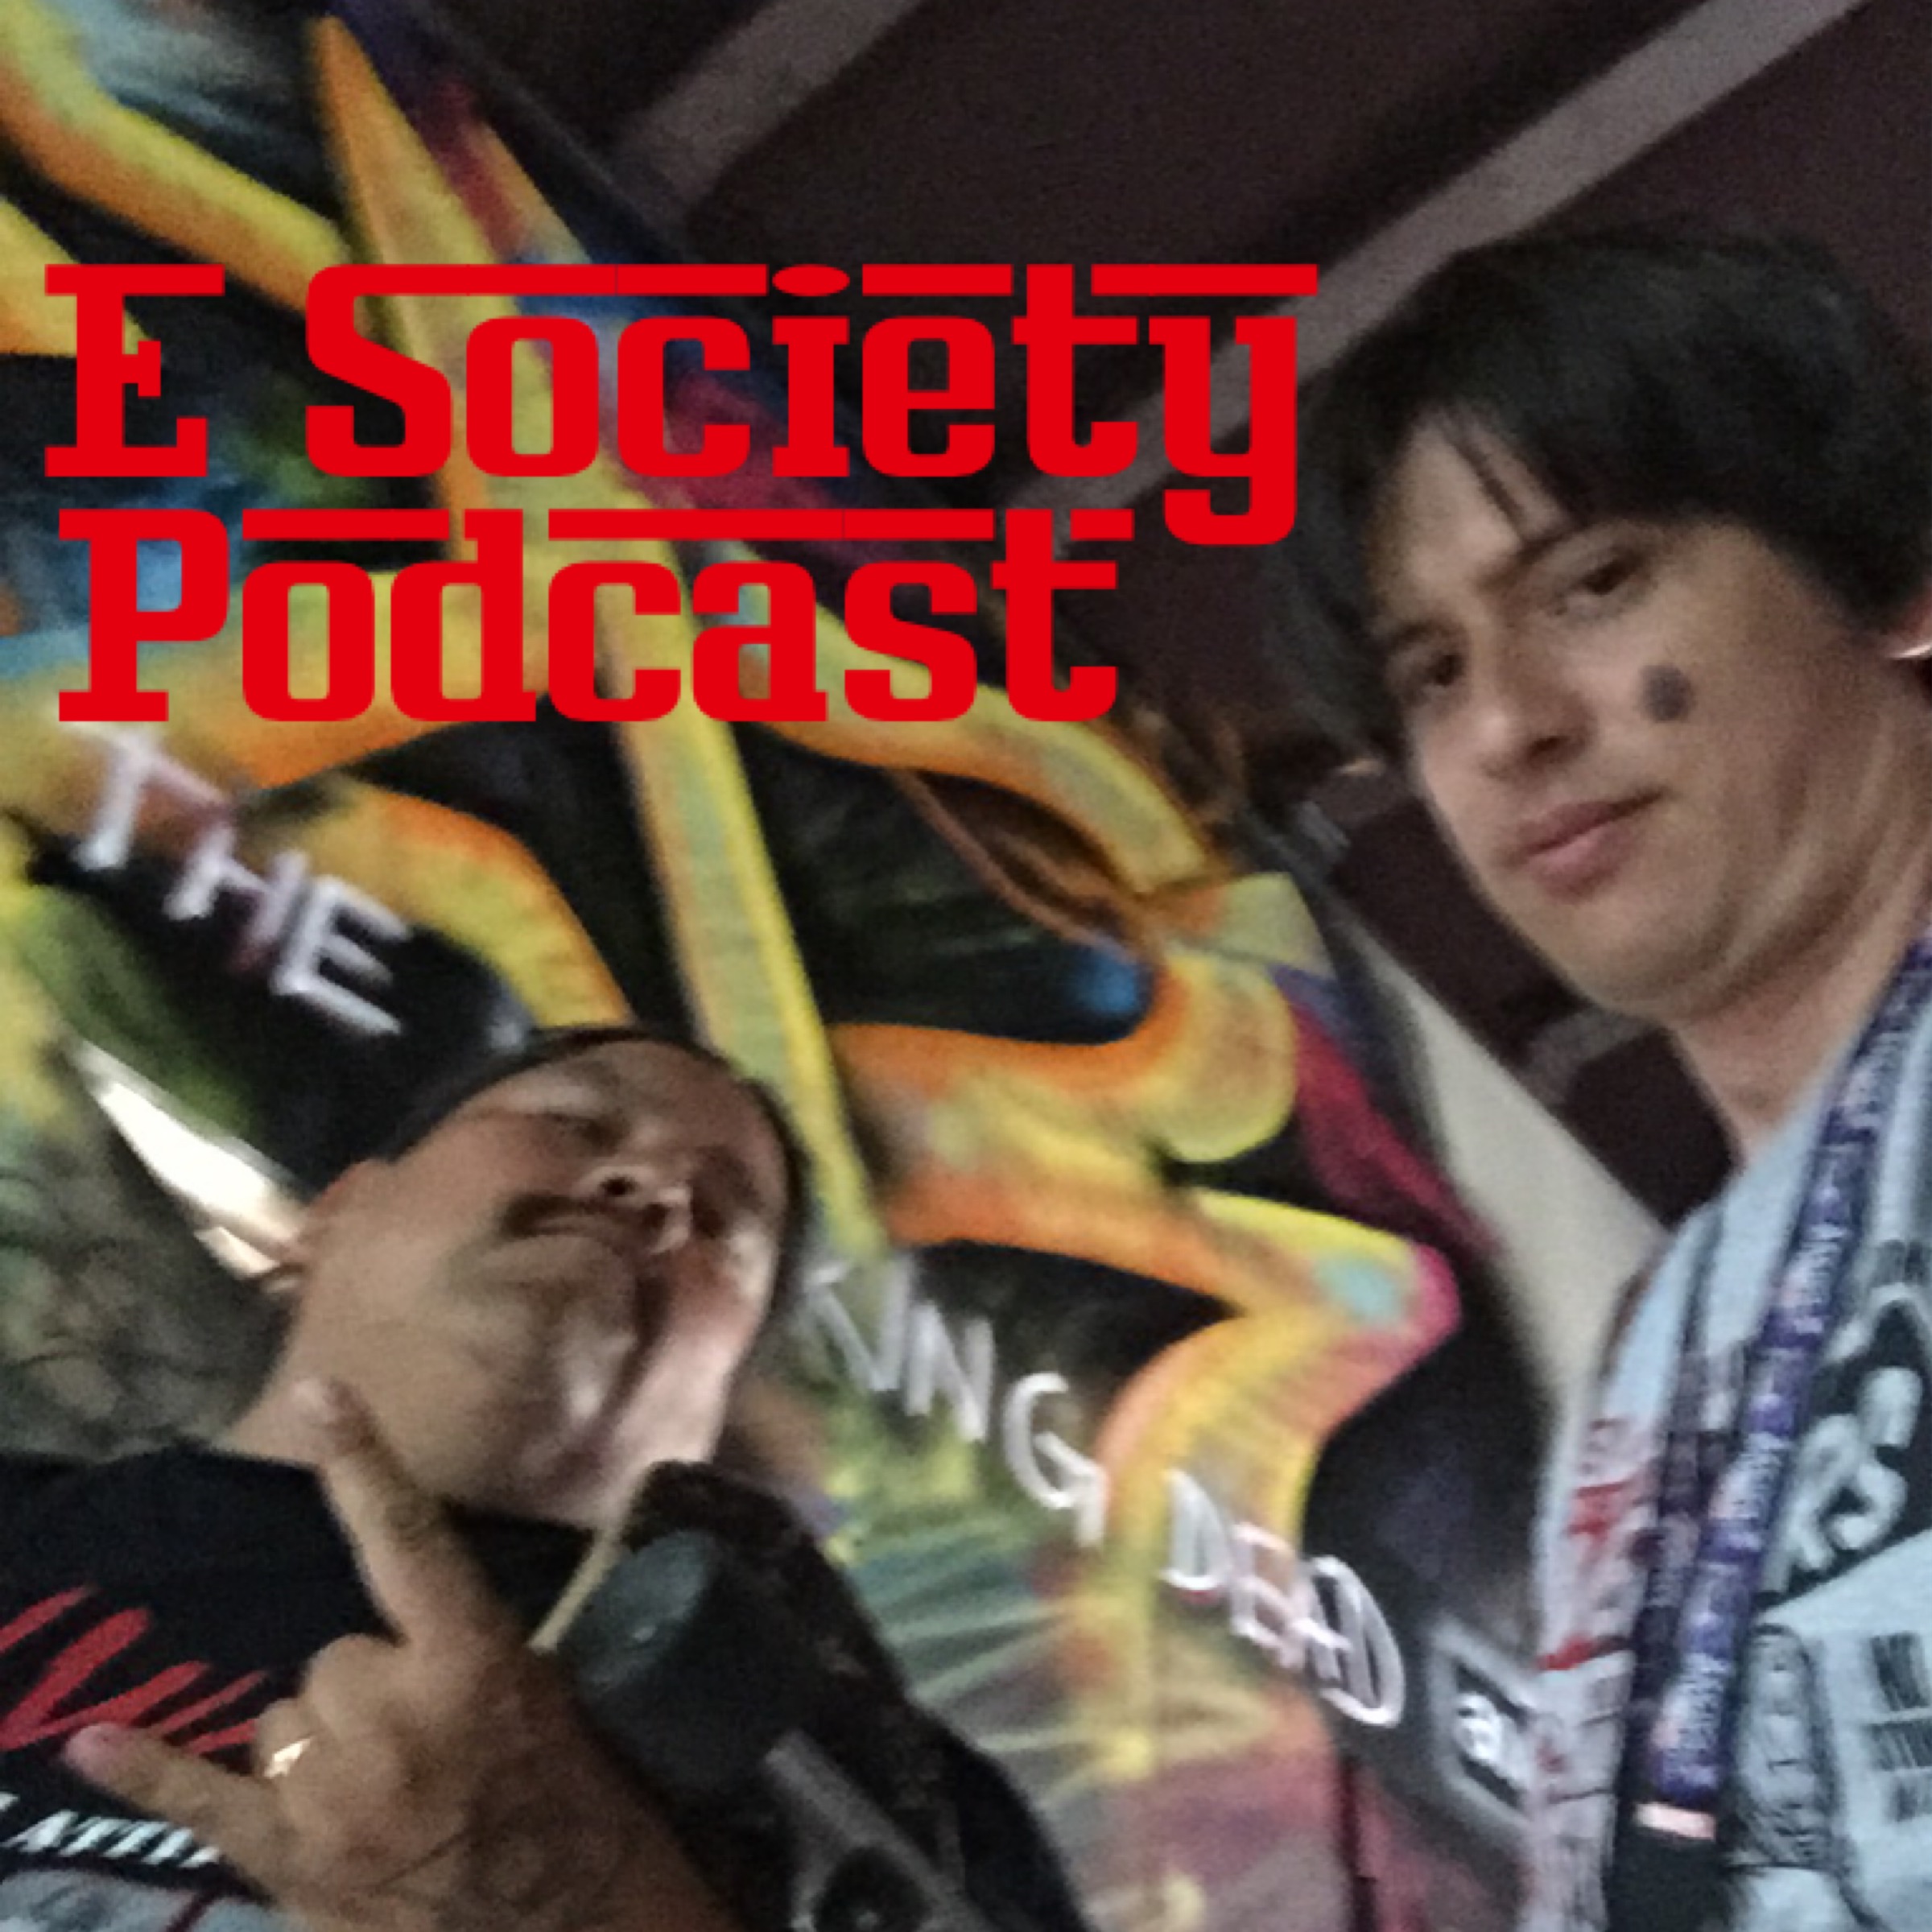 E Society Podcast - Ep. 52: Nez On The Throne GOT S:5